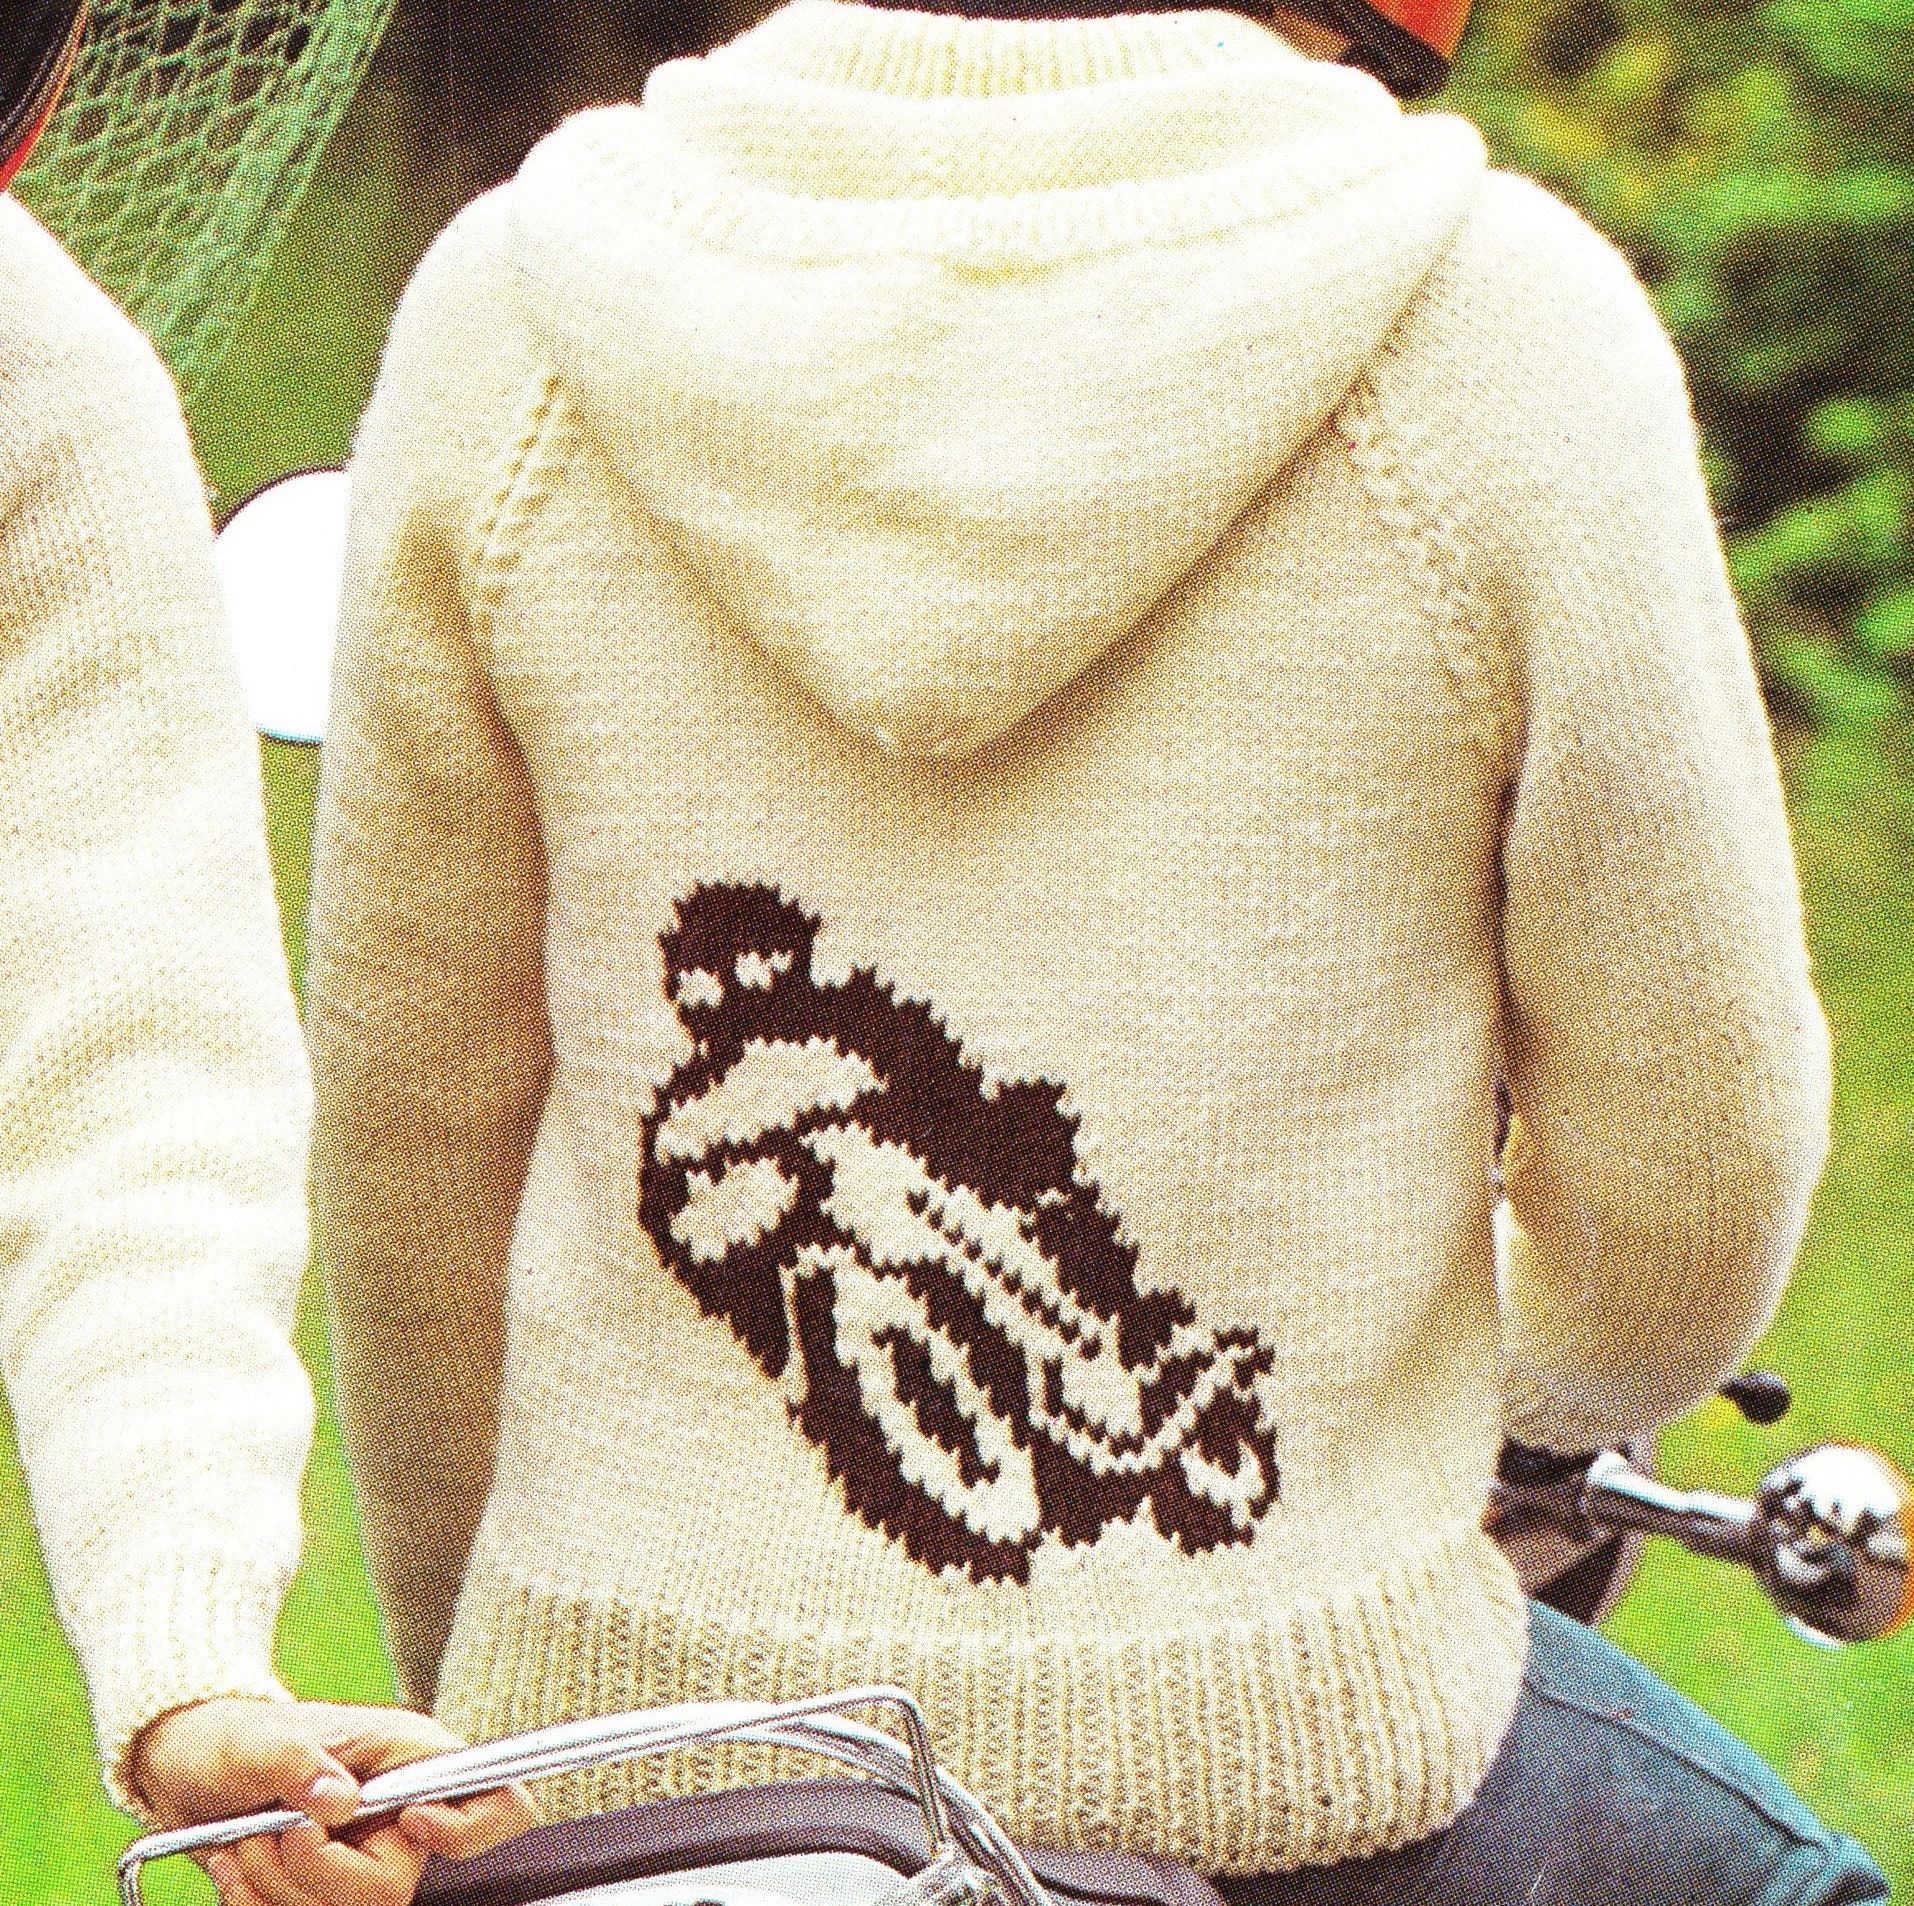 Men's Vintage Retro Knitted Zipper Hoodie Cardigan With Motorbike or Fish  Motif Pattern PDF 